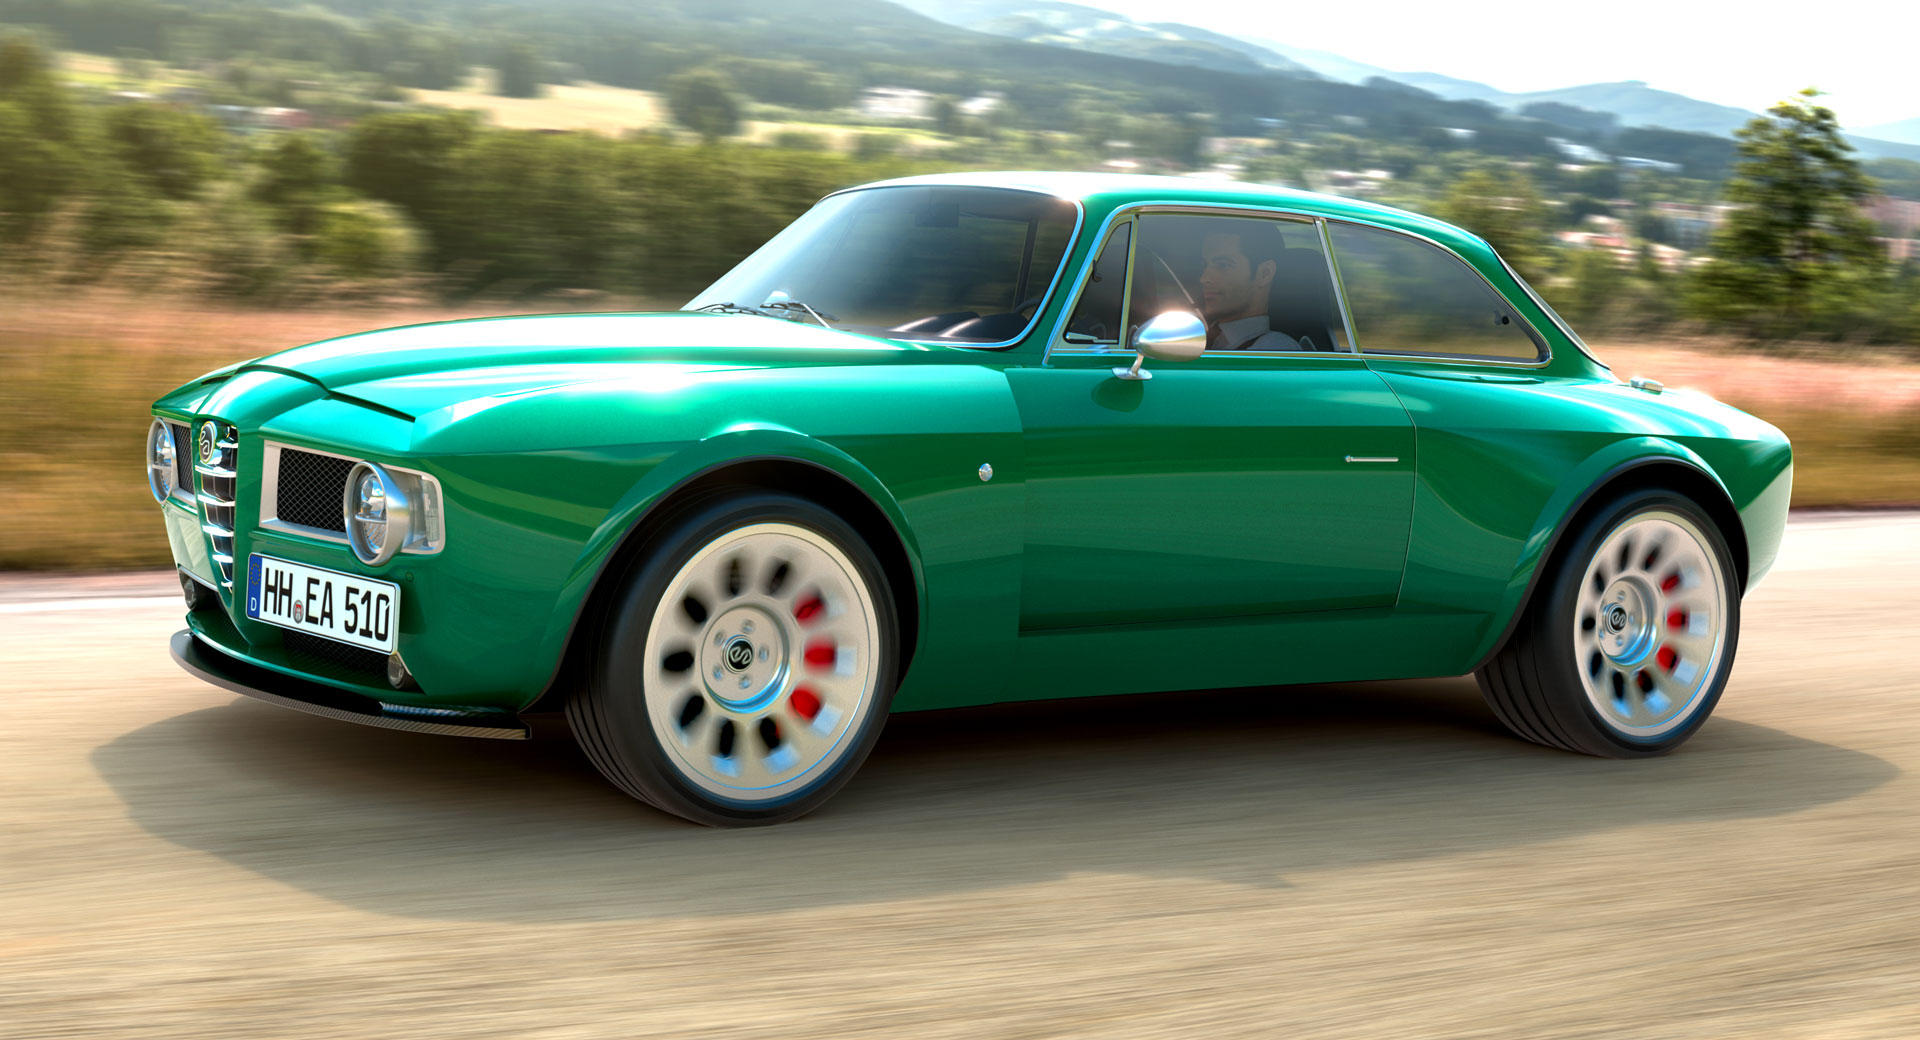 $430,000 Alfa Romeo GT Restomod Will Feature The 540HP V6 Heart Of